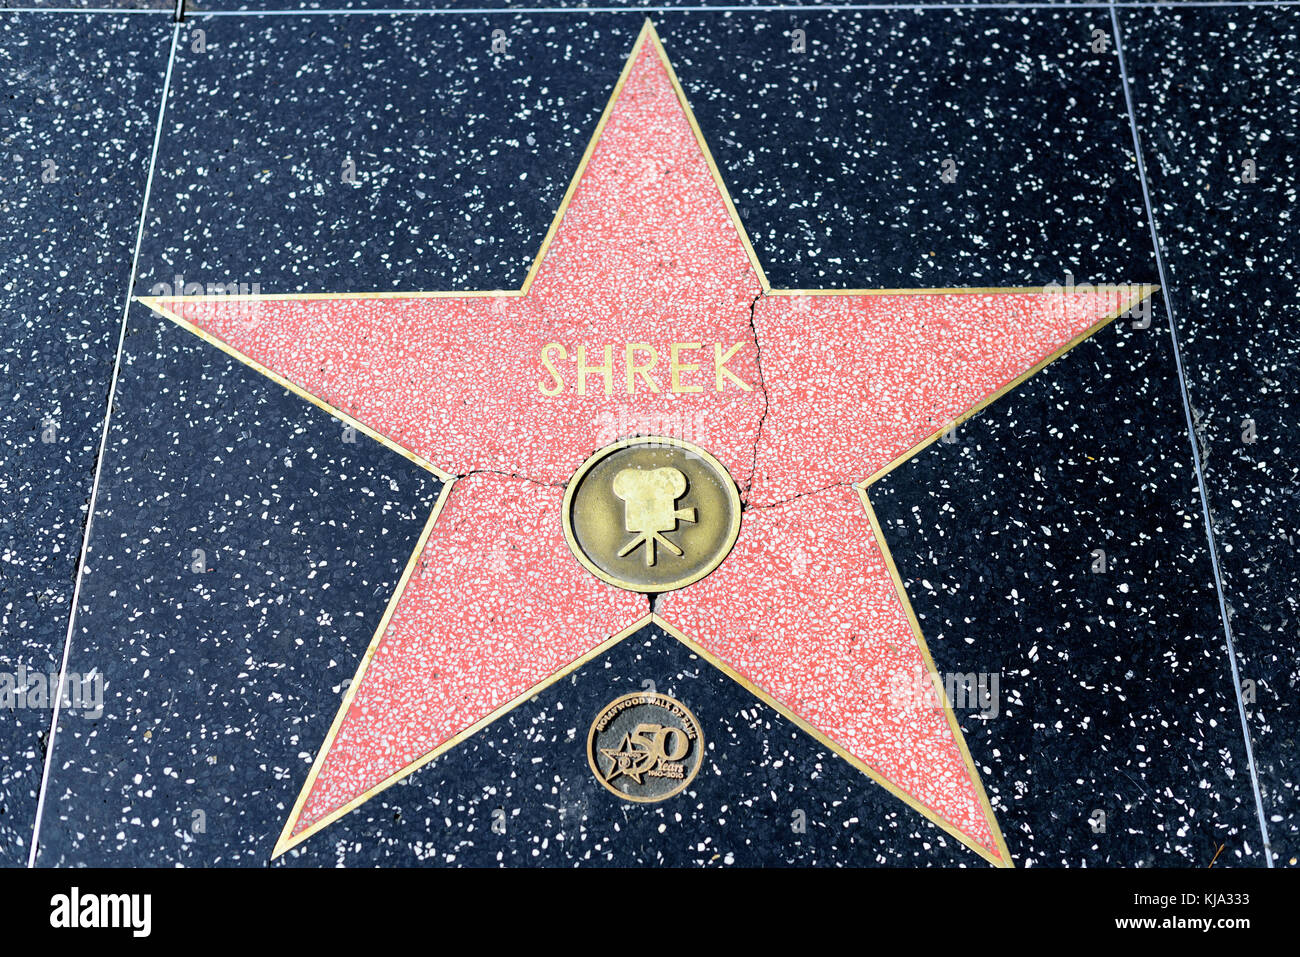 HOLLYWOOD, CA - DICEMBRE 06: Shrek star sulla Hollywood Walk of Fame a Hollywood, California il 6 dicembre 2016. Foto Stock